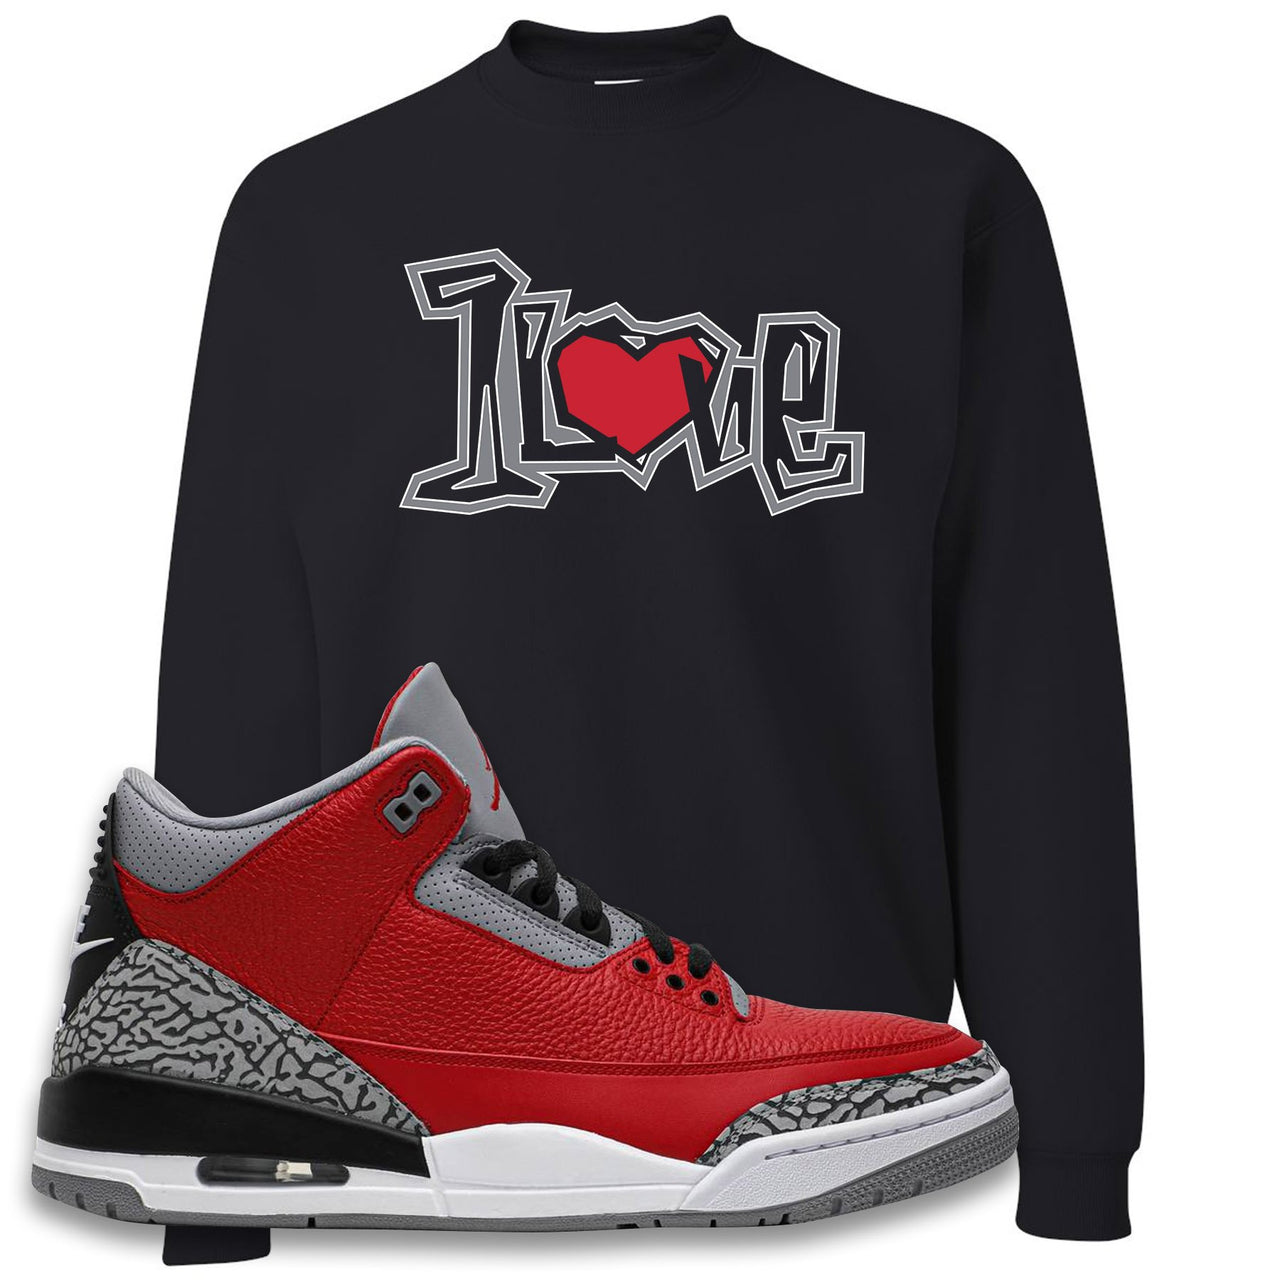 Chicago Exclusive Jordan 3 Red Cement Sneaker Black Crewneck Sweatshirt | Crewneck to match Jordan 3 All Star Red Cement Shoes | 1 Love